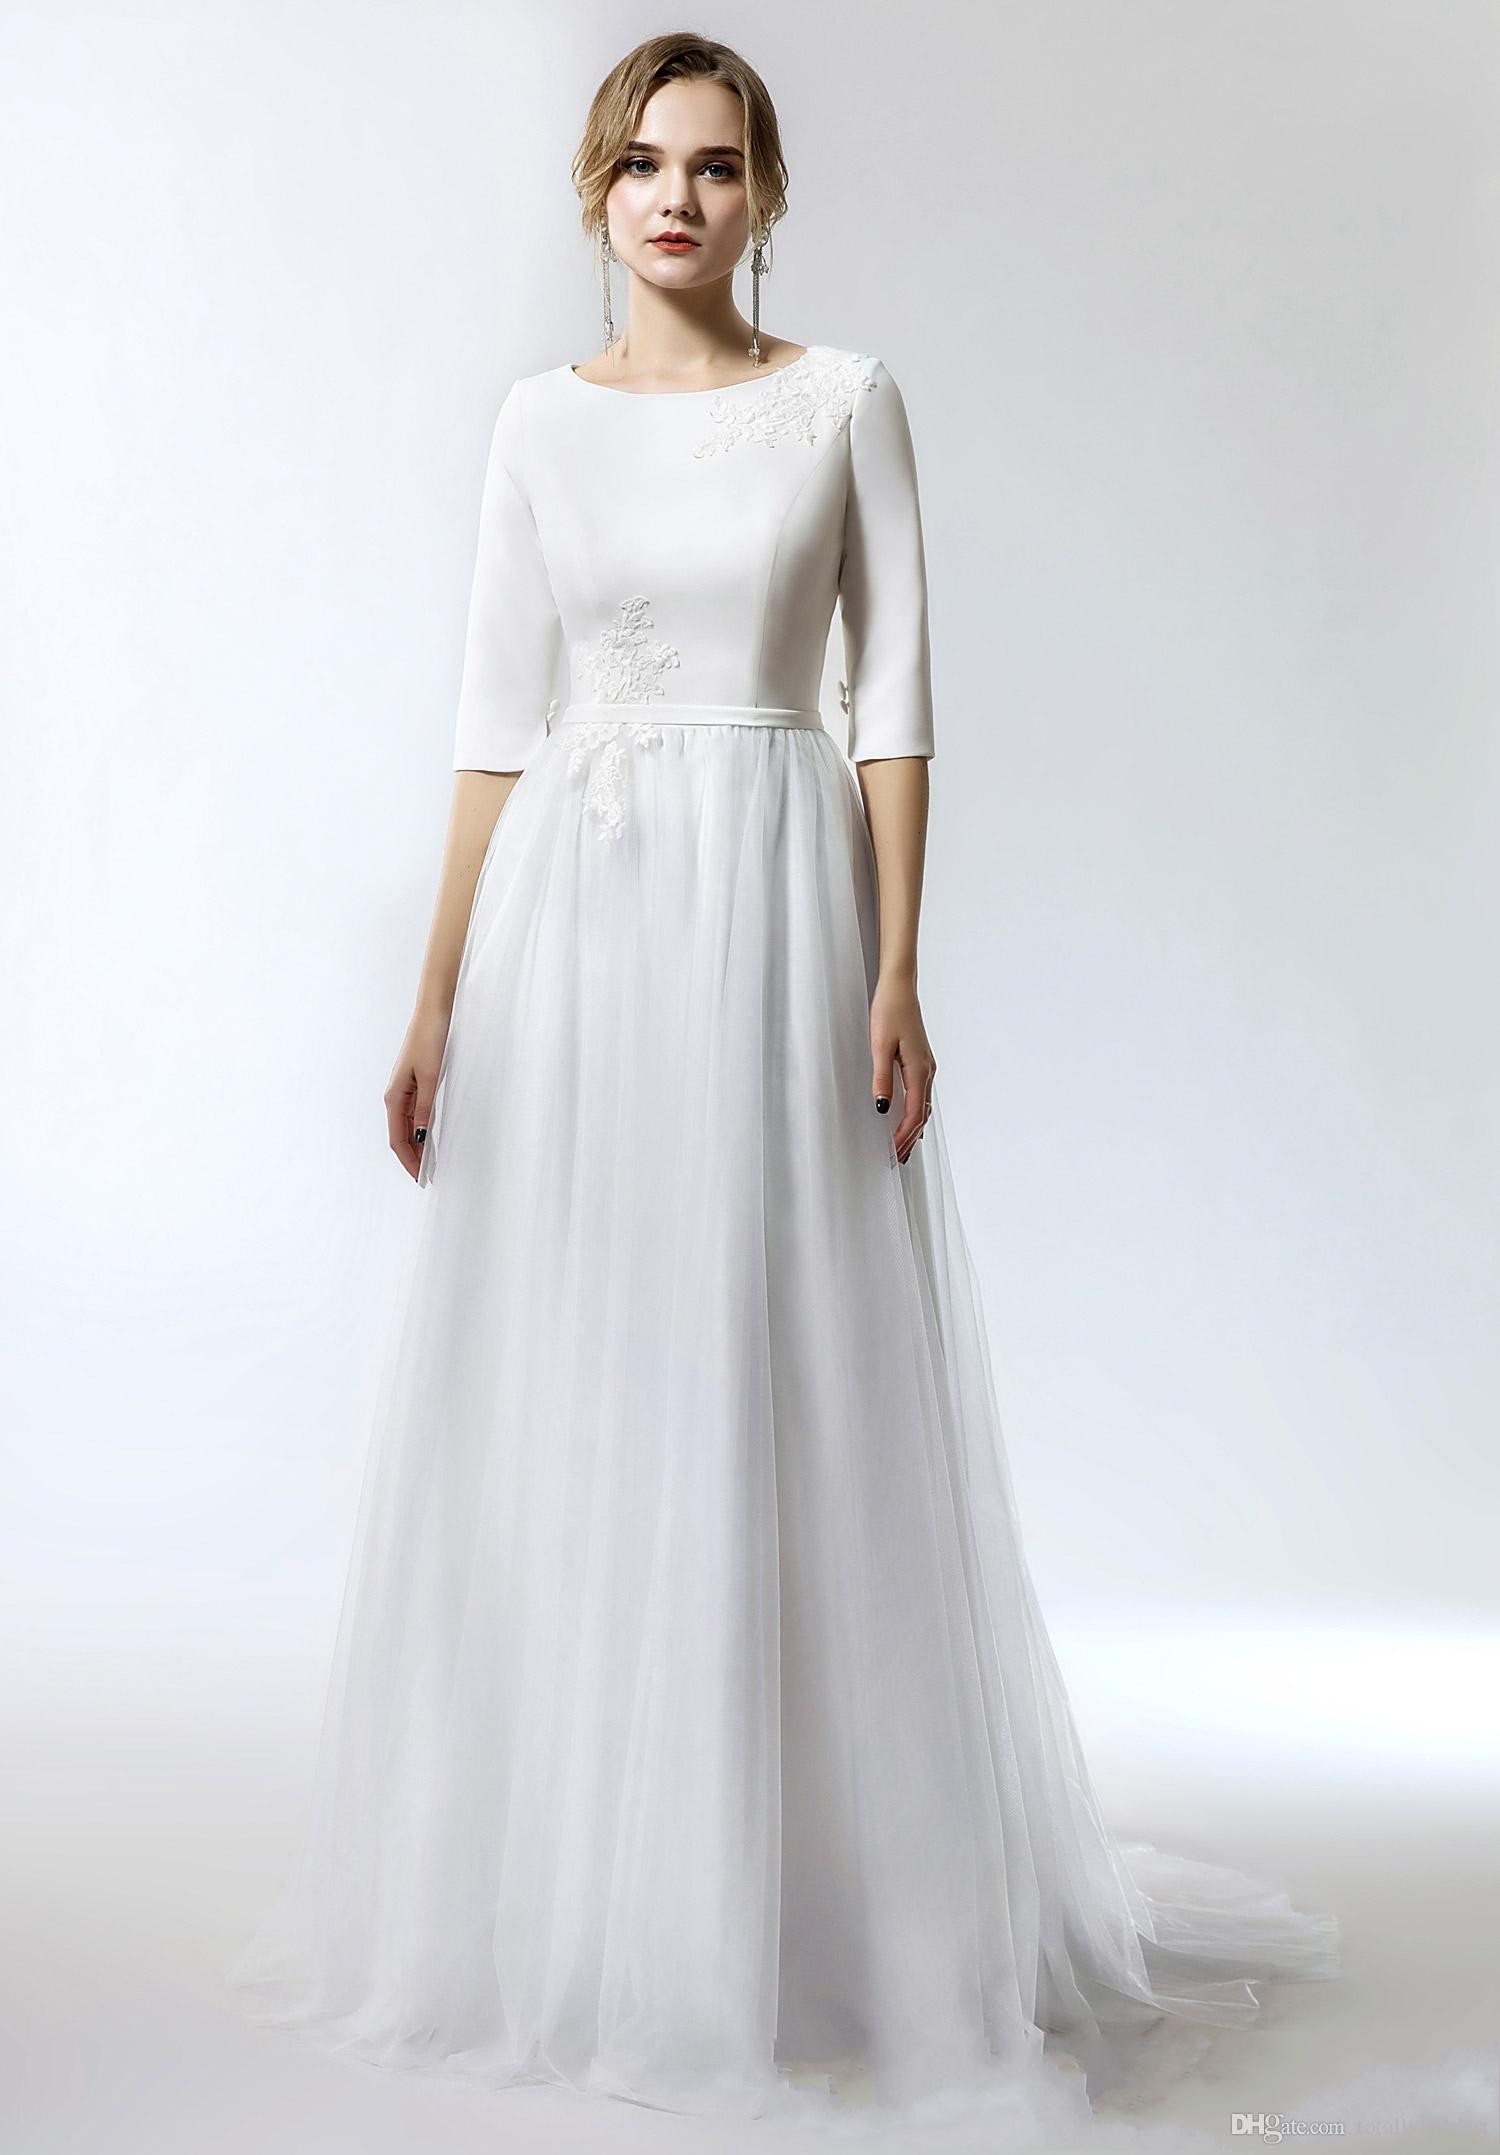 Simple Cheap Wedding Dresses
 Discount 2019 New Simple A Line Long Modest Wedding Dress